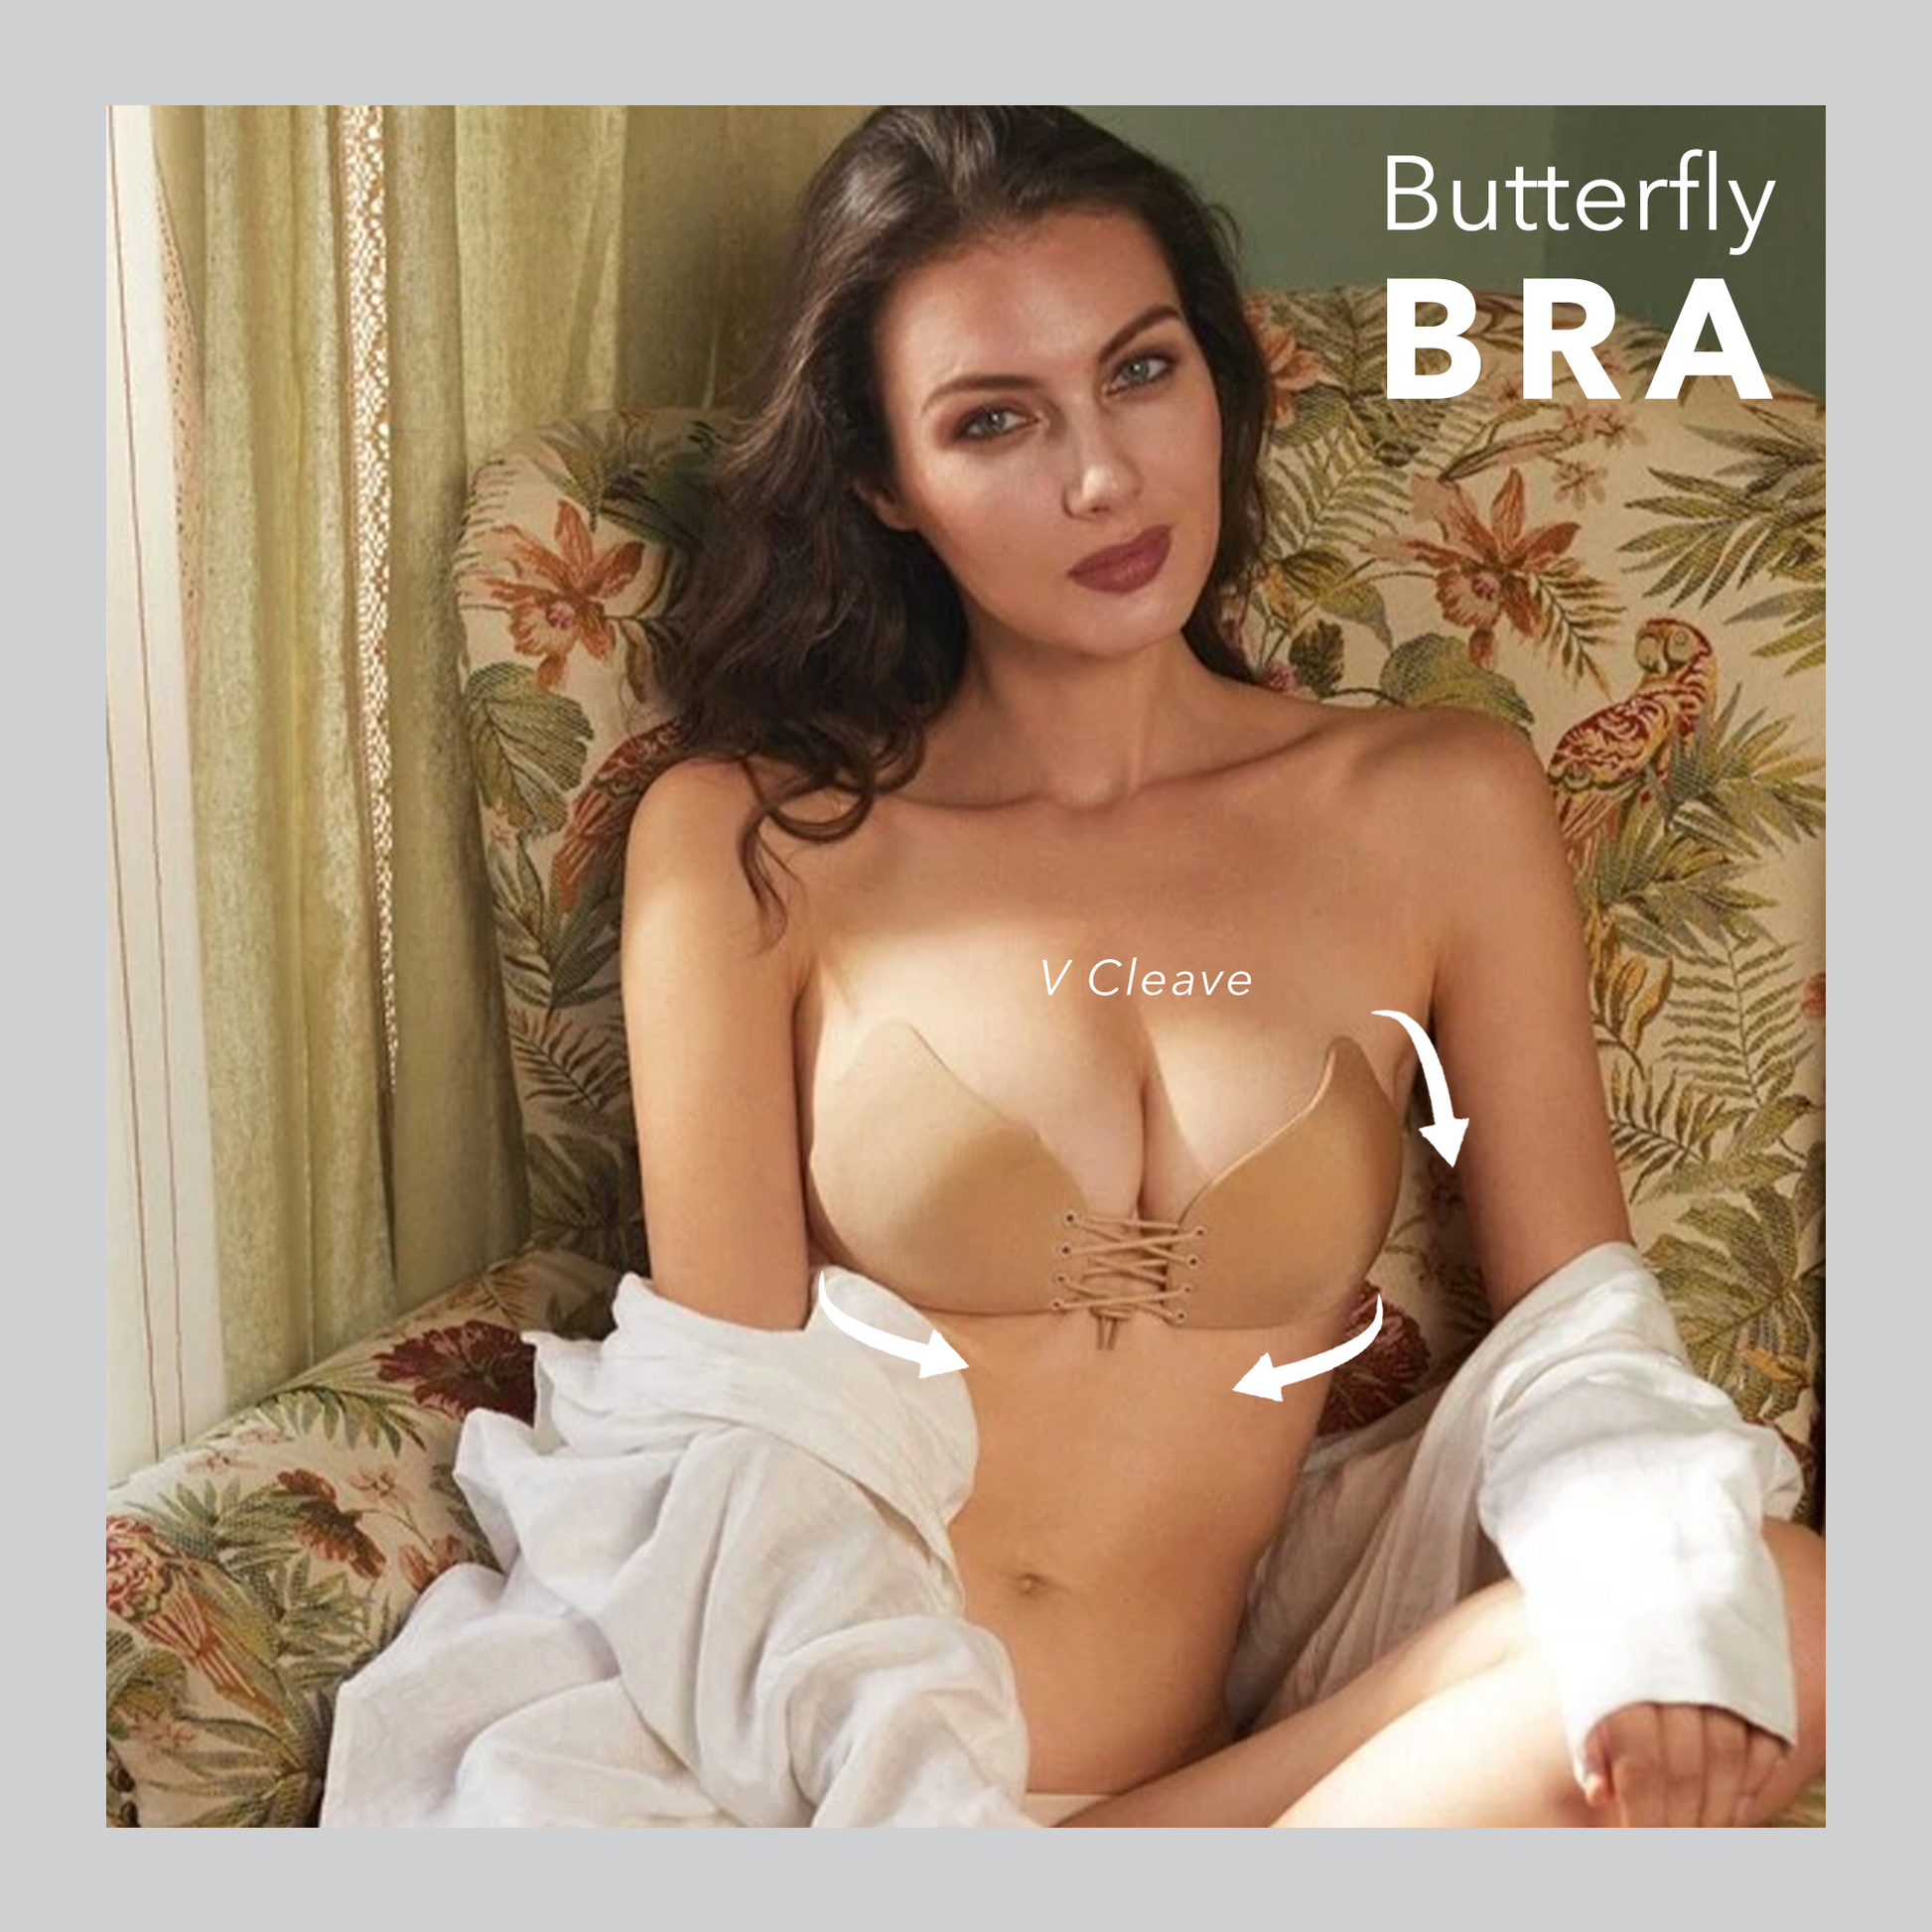 Magic push up bra butterfly bra